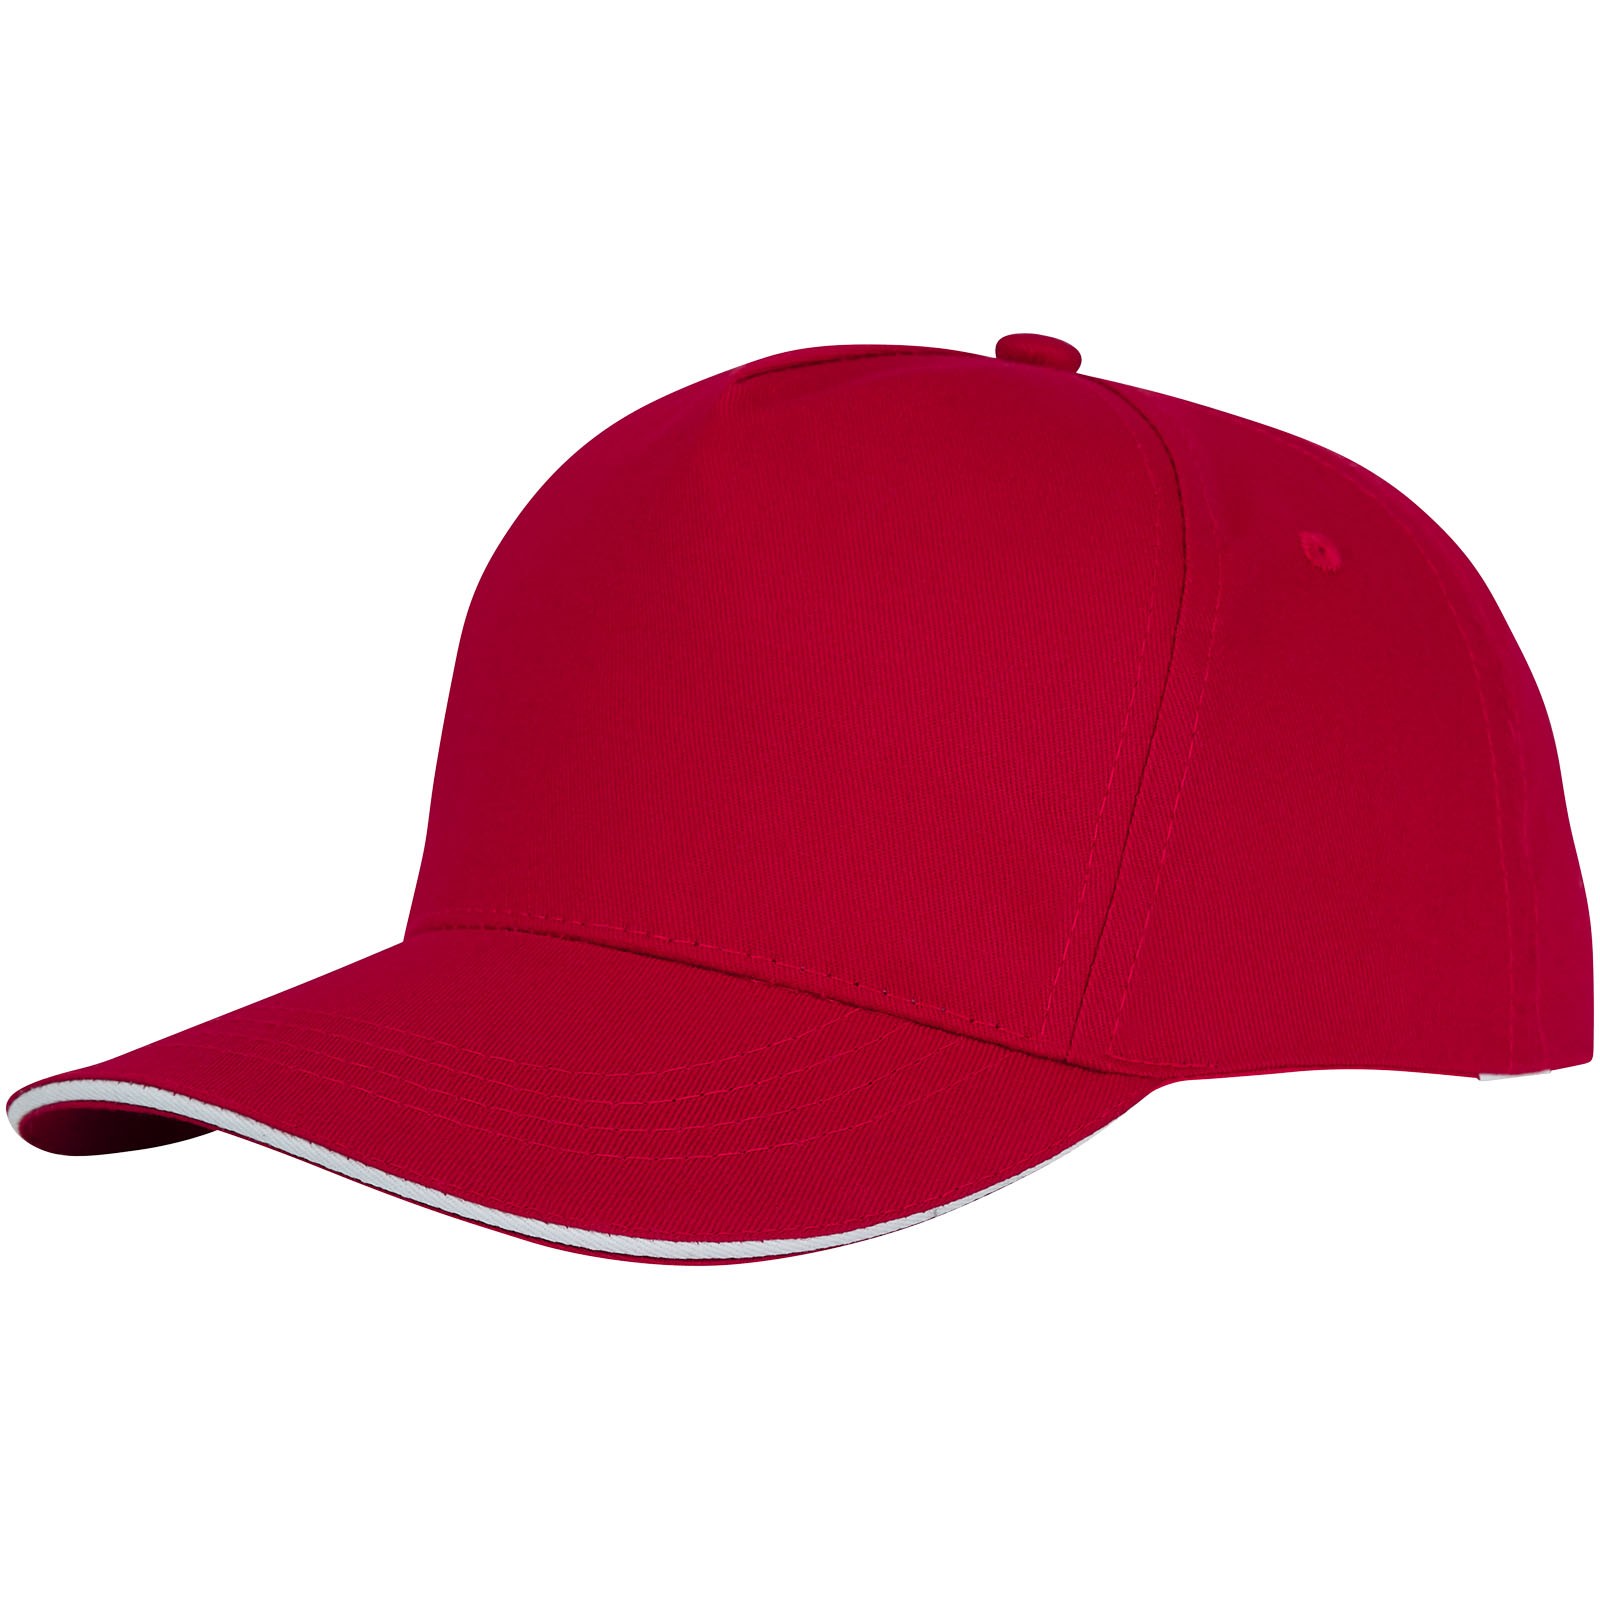 Gorra de 5 paneles con ribete "Ceto" - Rojo